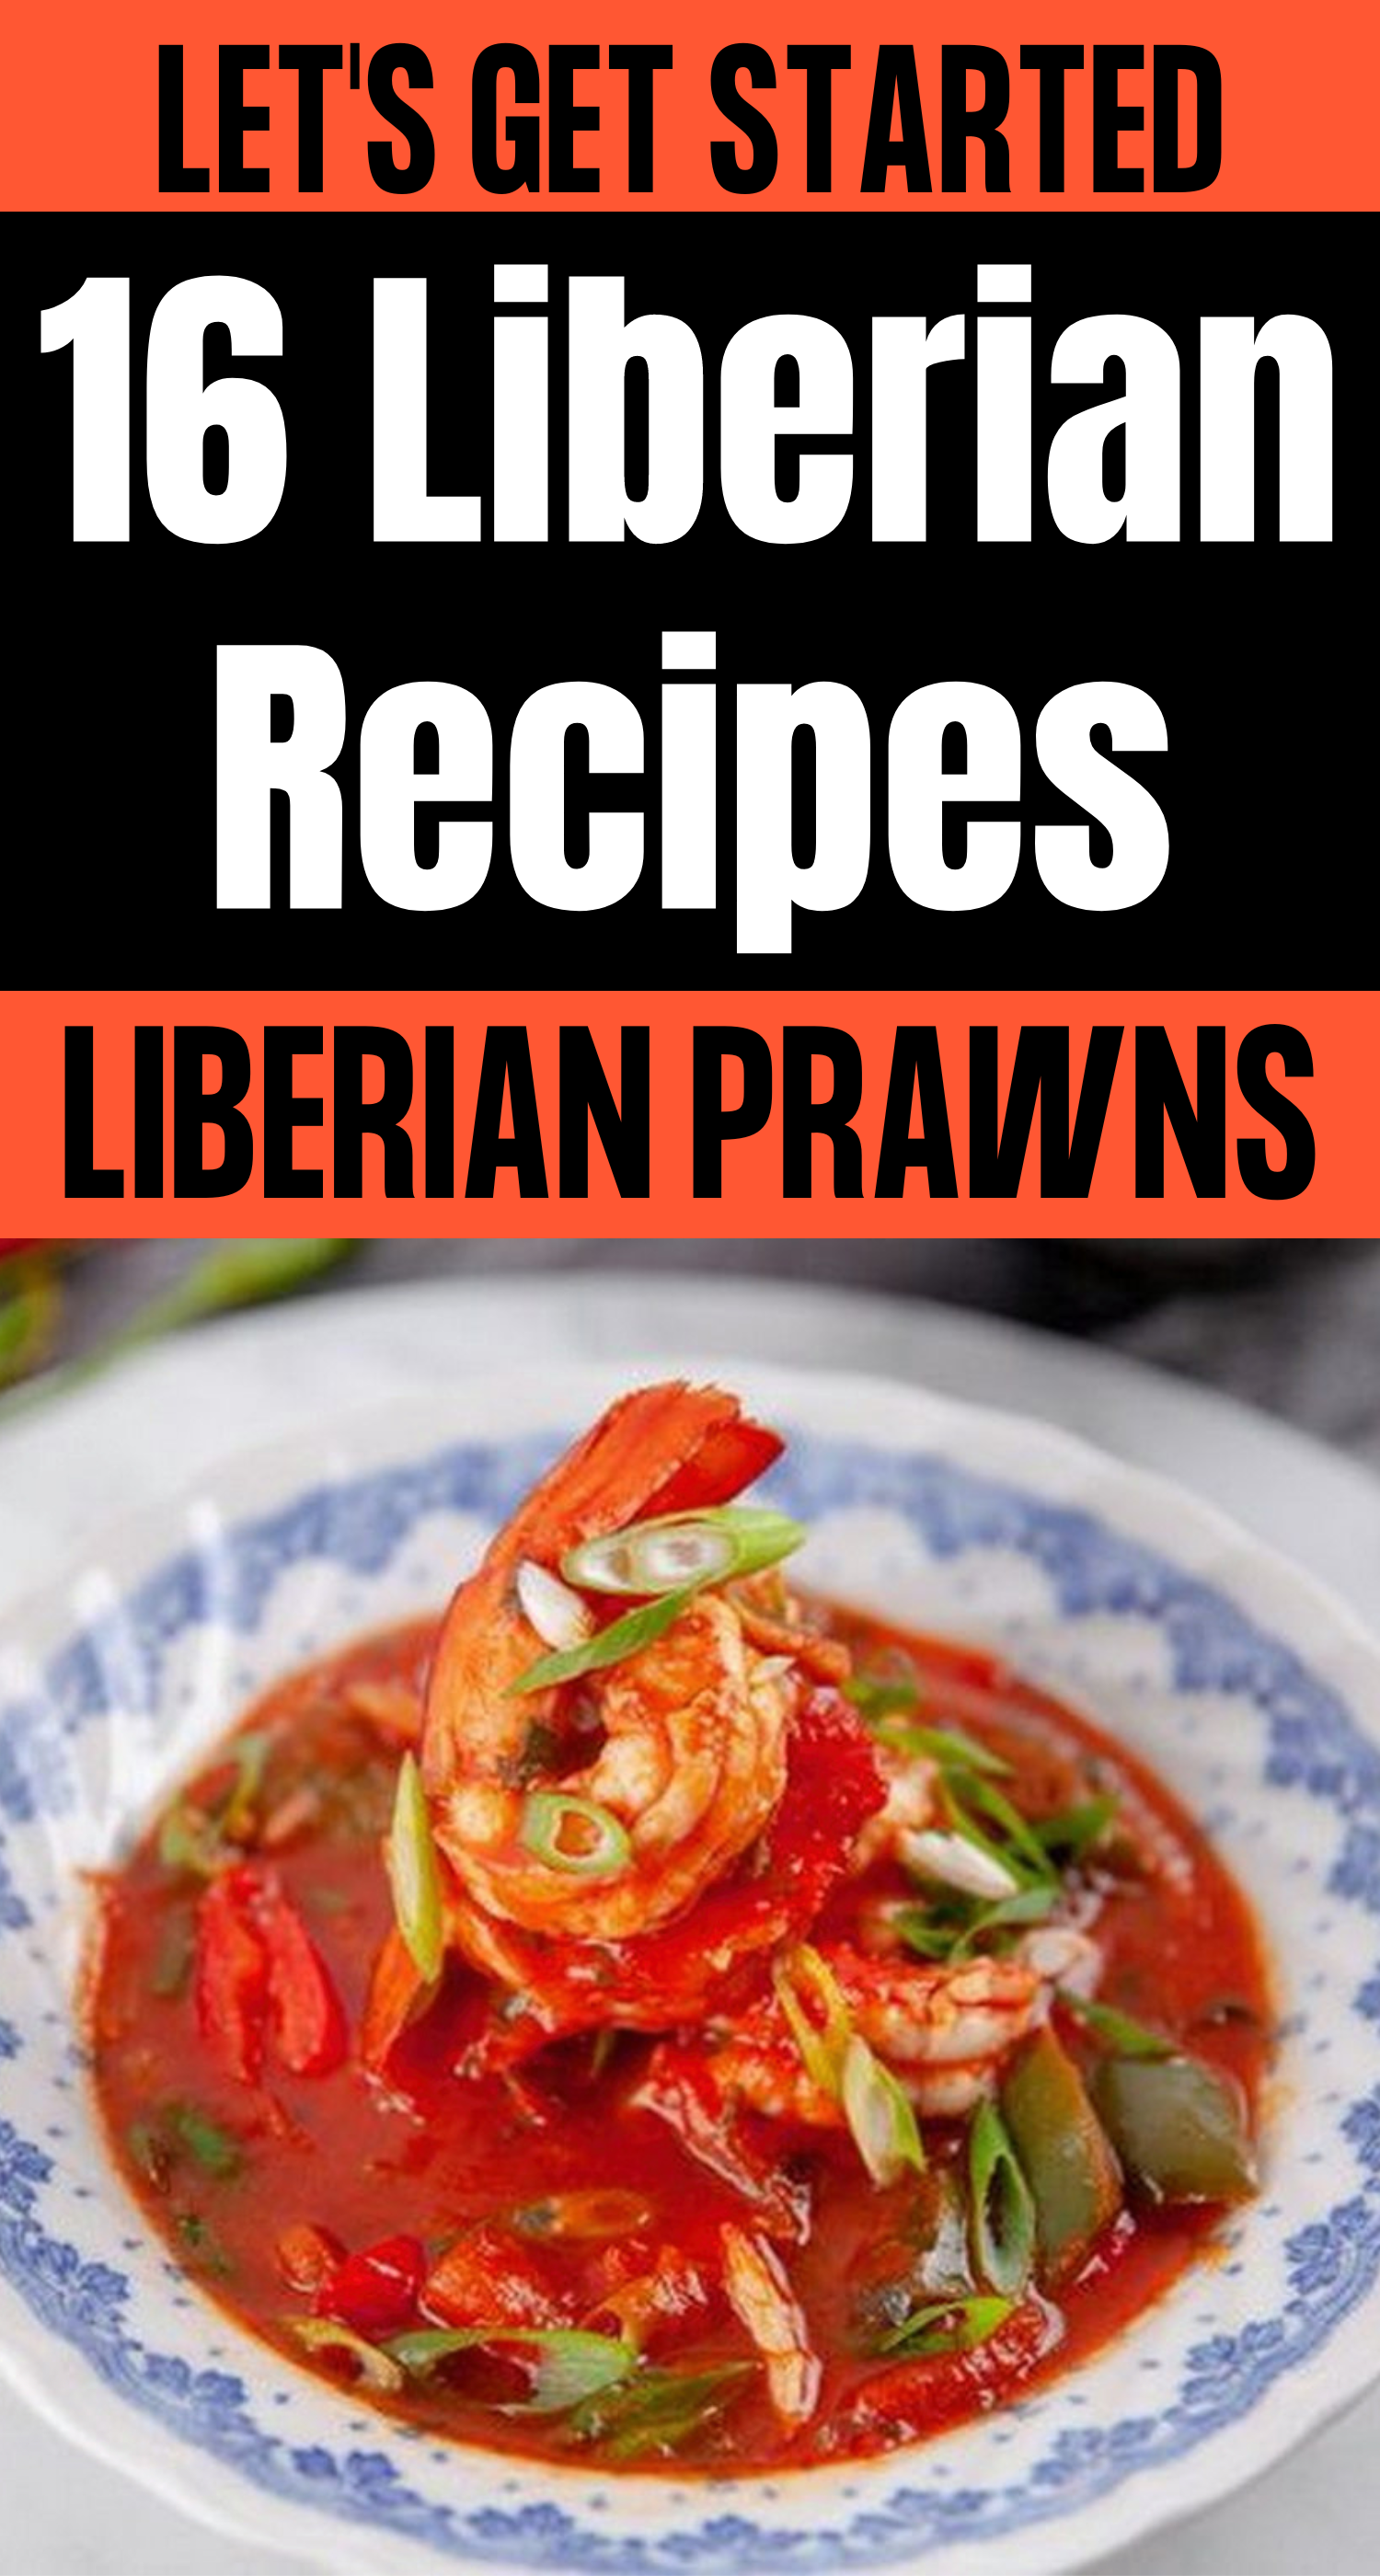 16 Liberian Recipes - Liberian Prawns